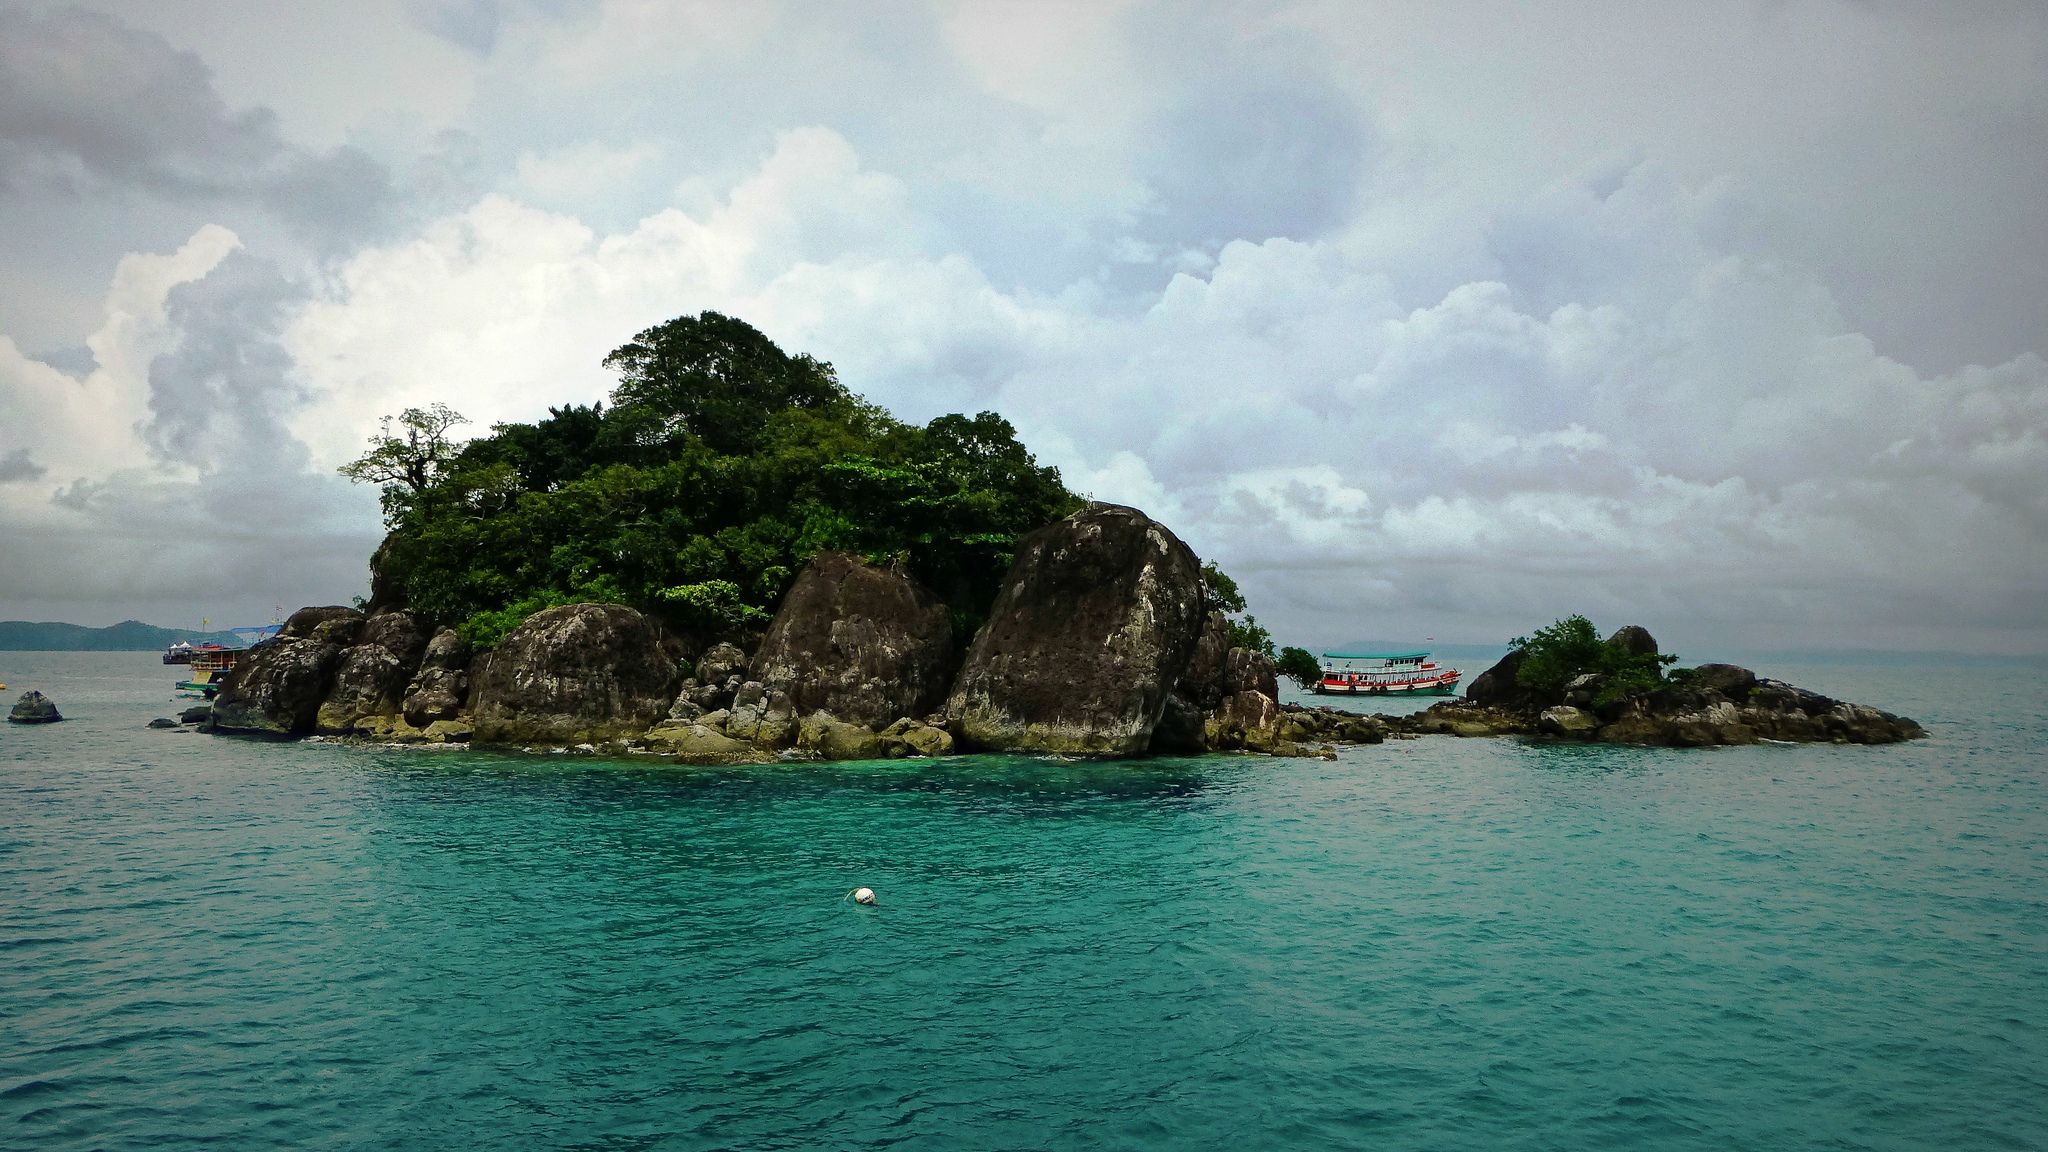 Island setting